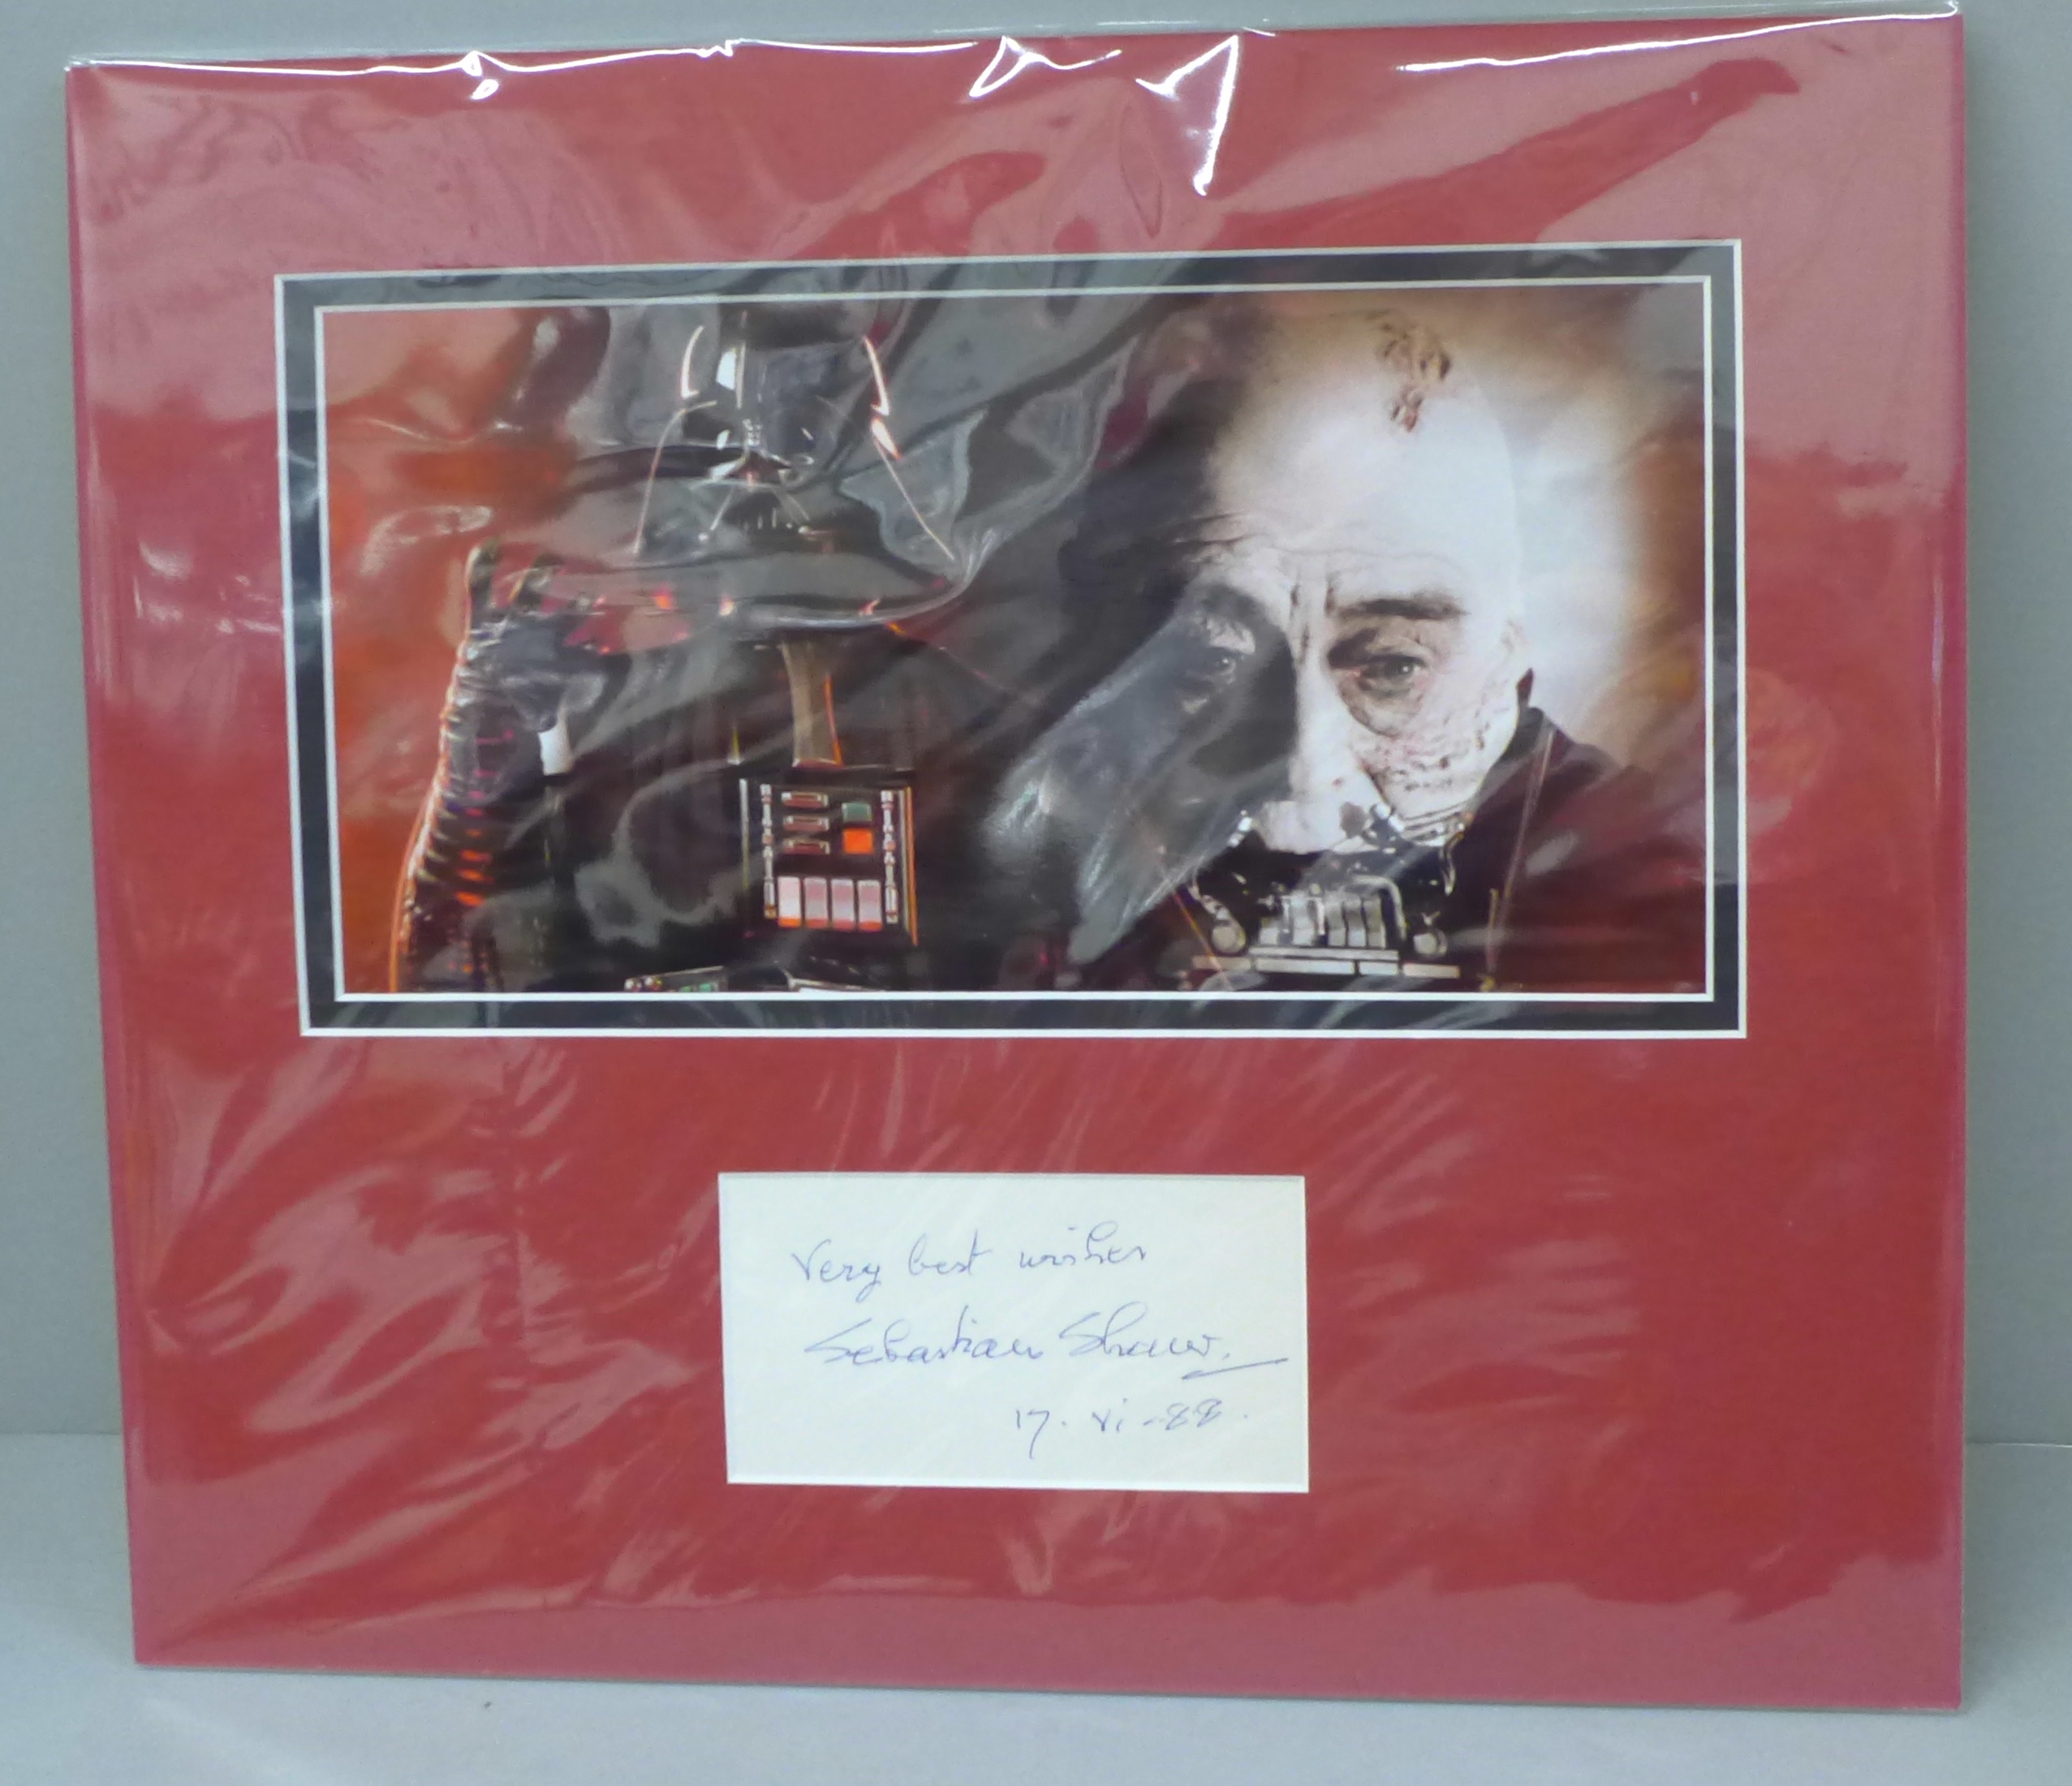 A Sebastian Shaw (Anakin Skywalker) autographed Star Wars display